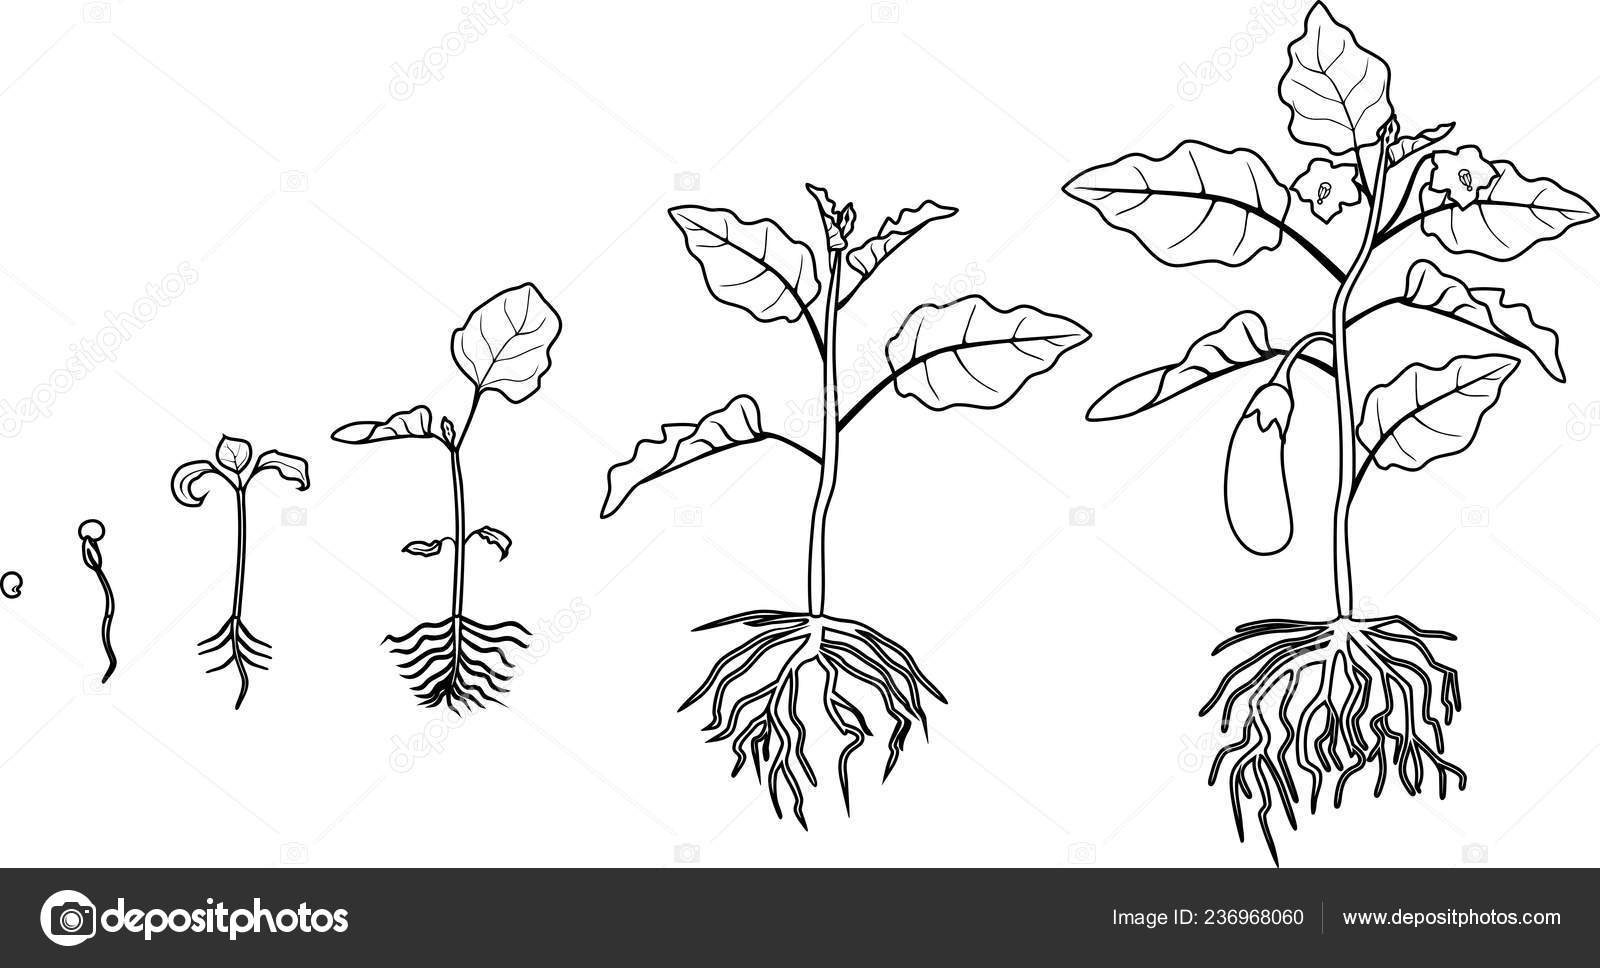 Desenho de Beringela vegetal para colorir - Tudodesenhos